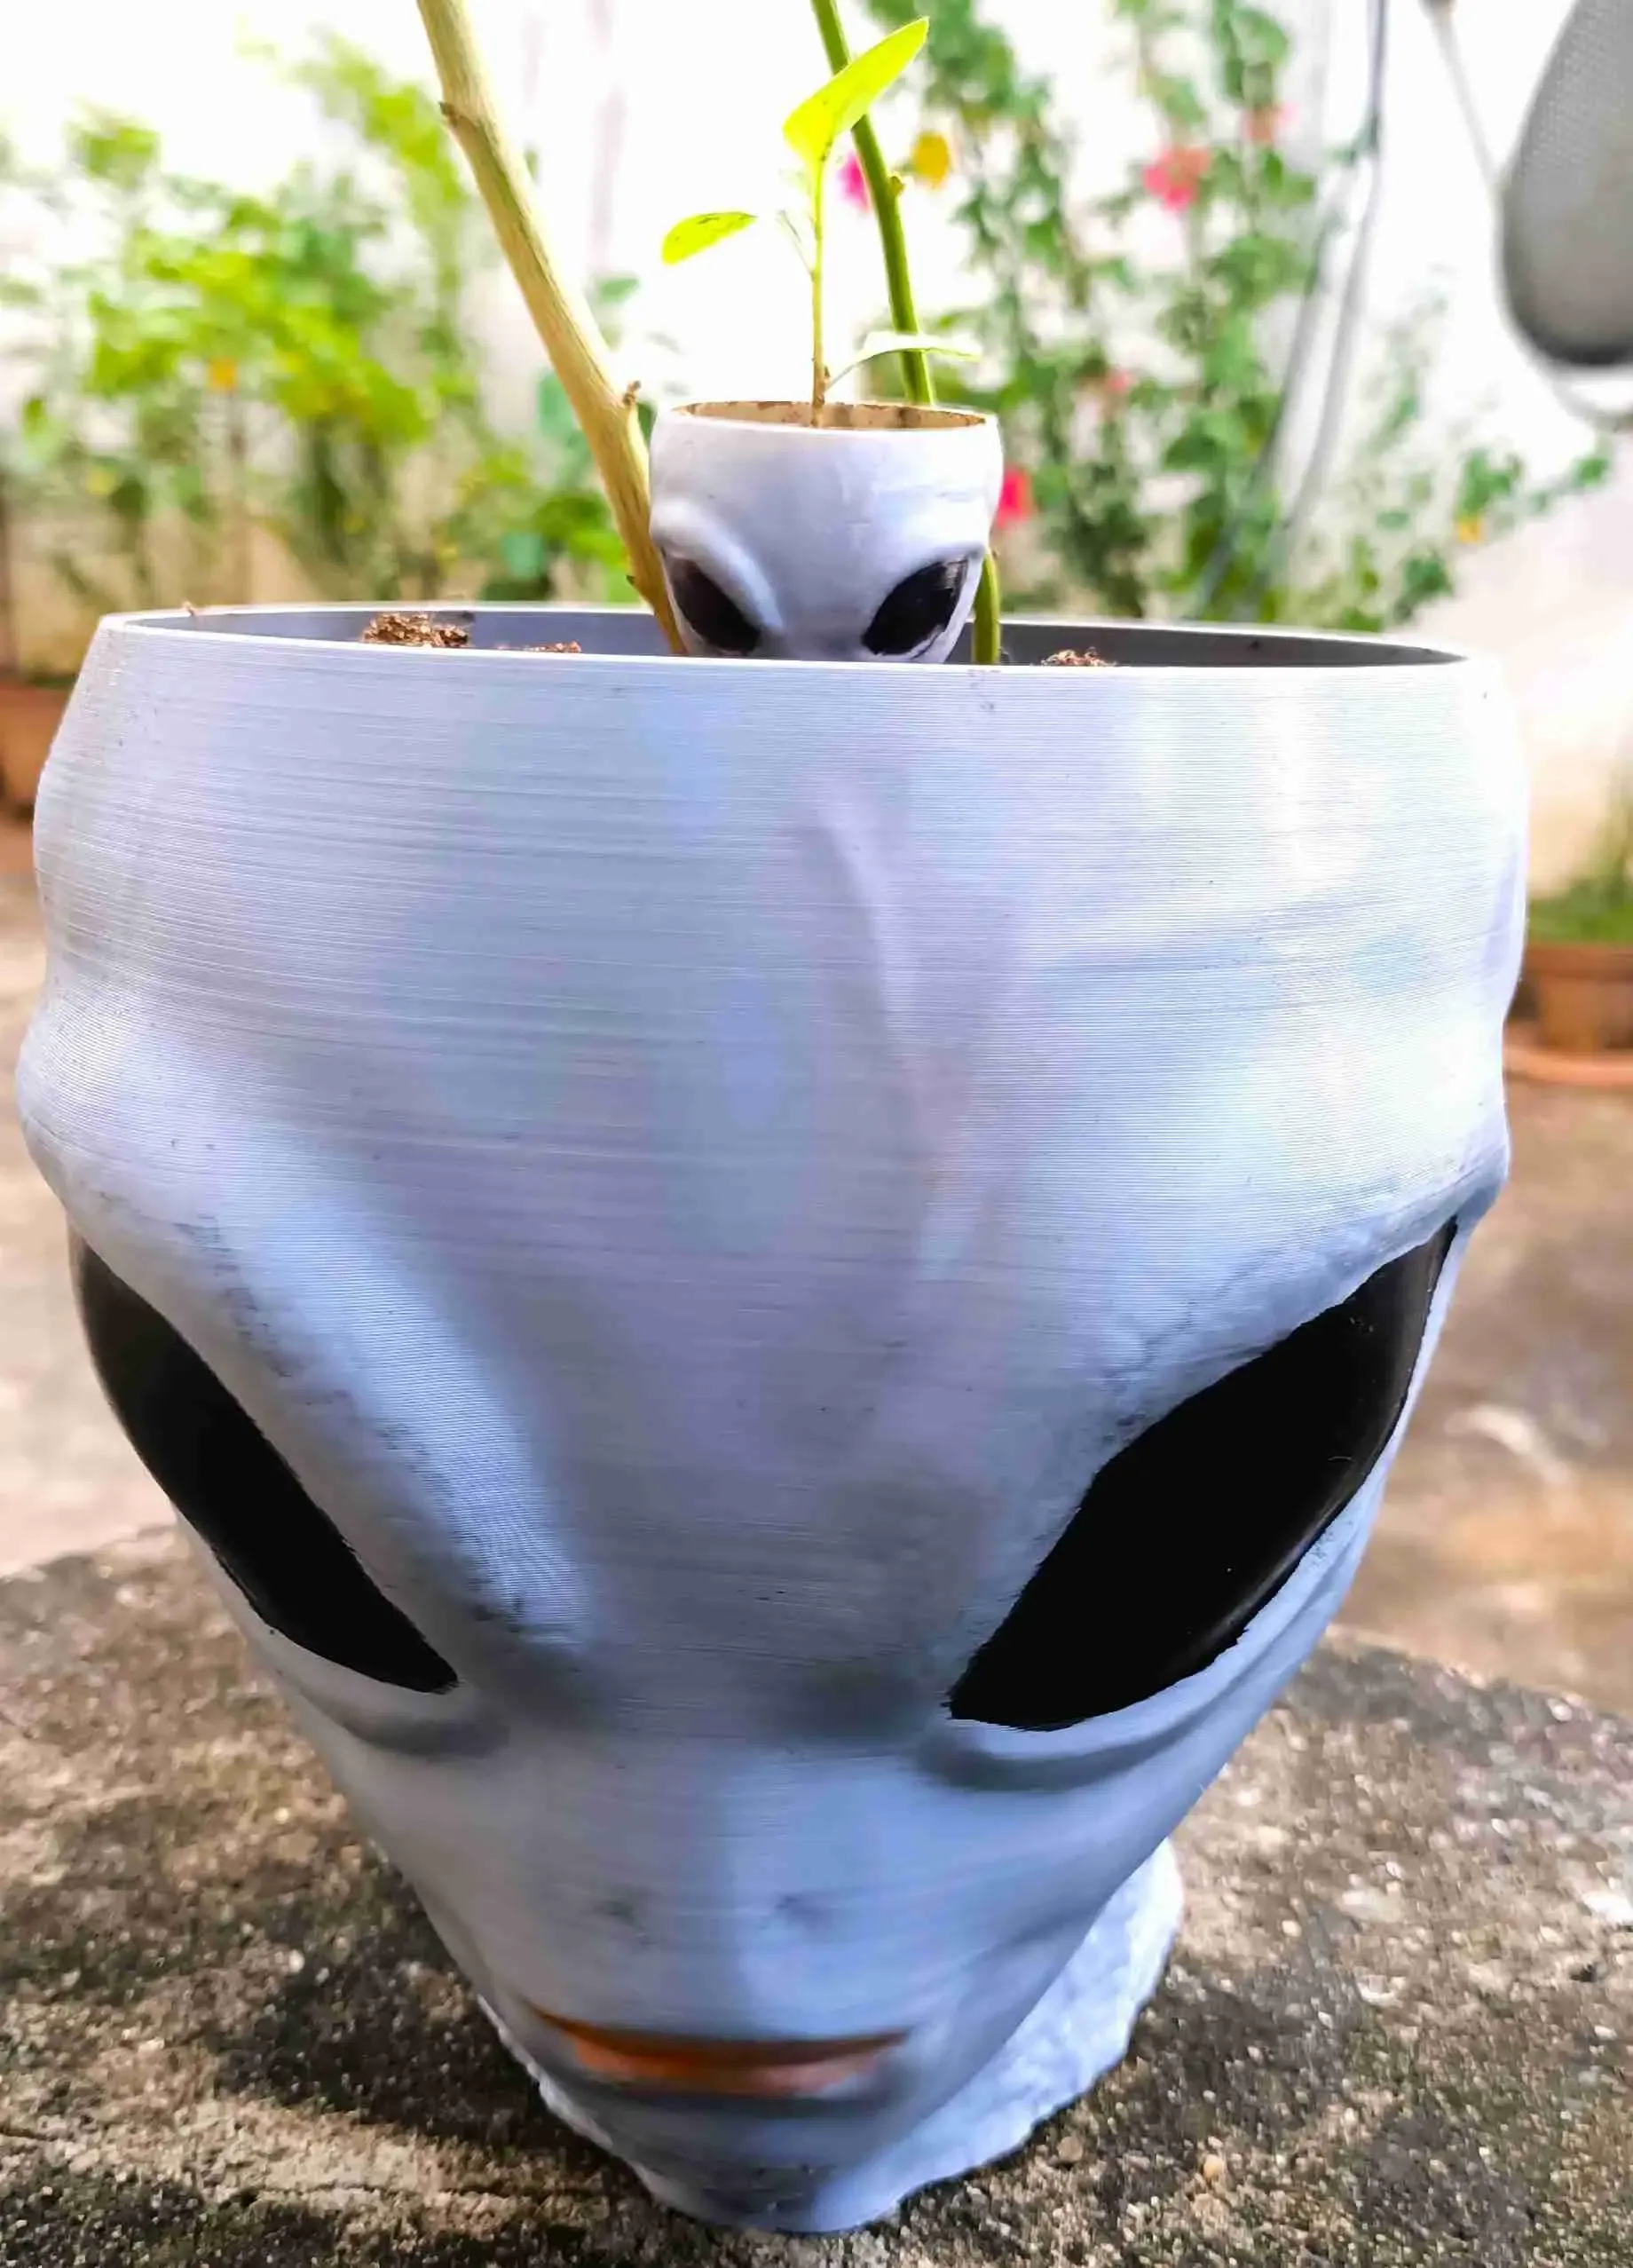 Alien bowl / plant pot halloween